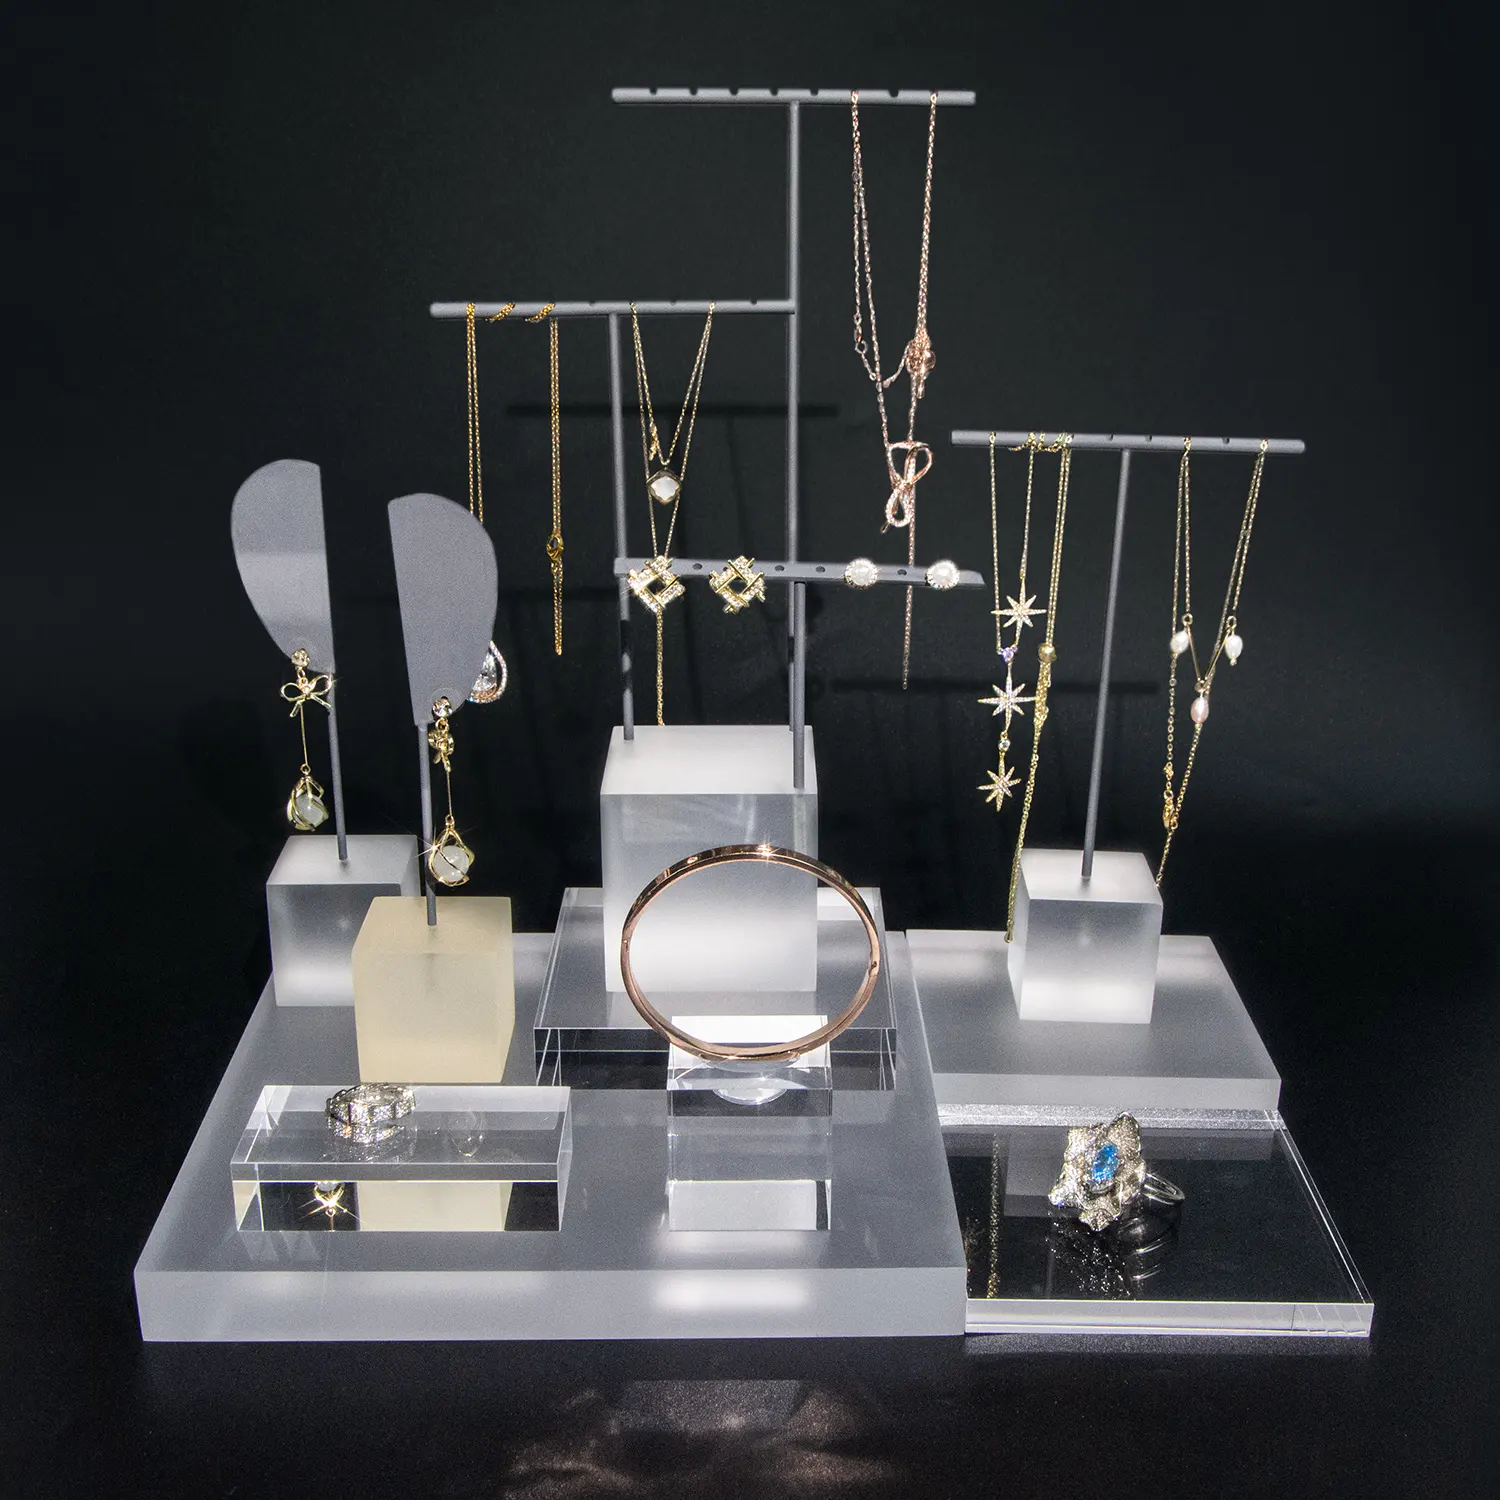 Forte Custom LOGO Fashion Jewel Necklace Earrings Ring Bangle Bracelet Acrylic Jewelry Display Tray Stand